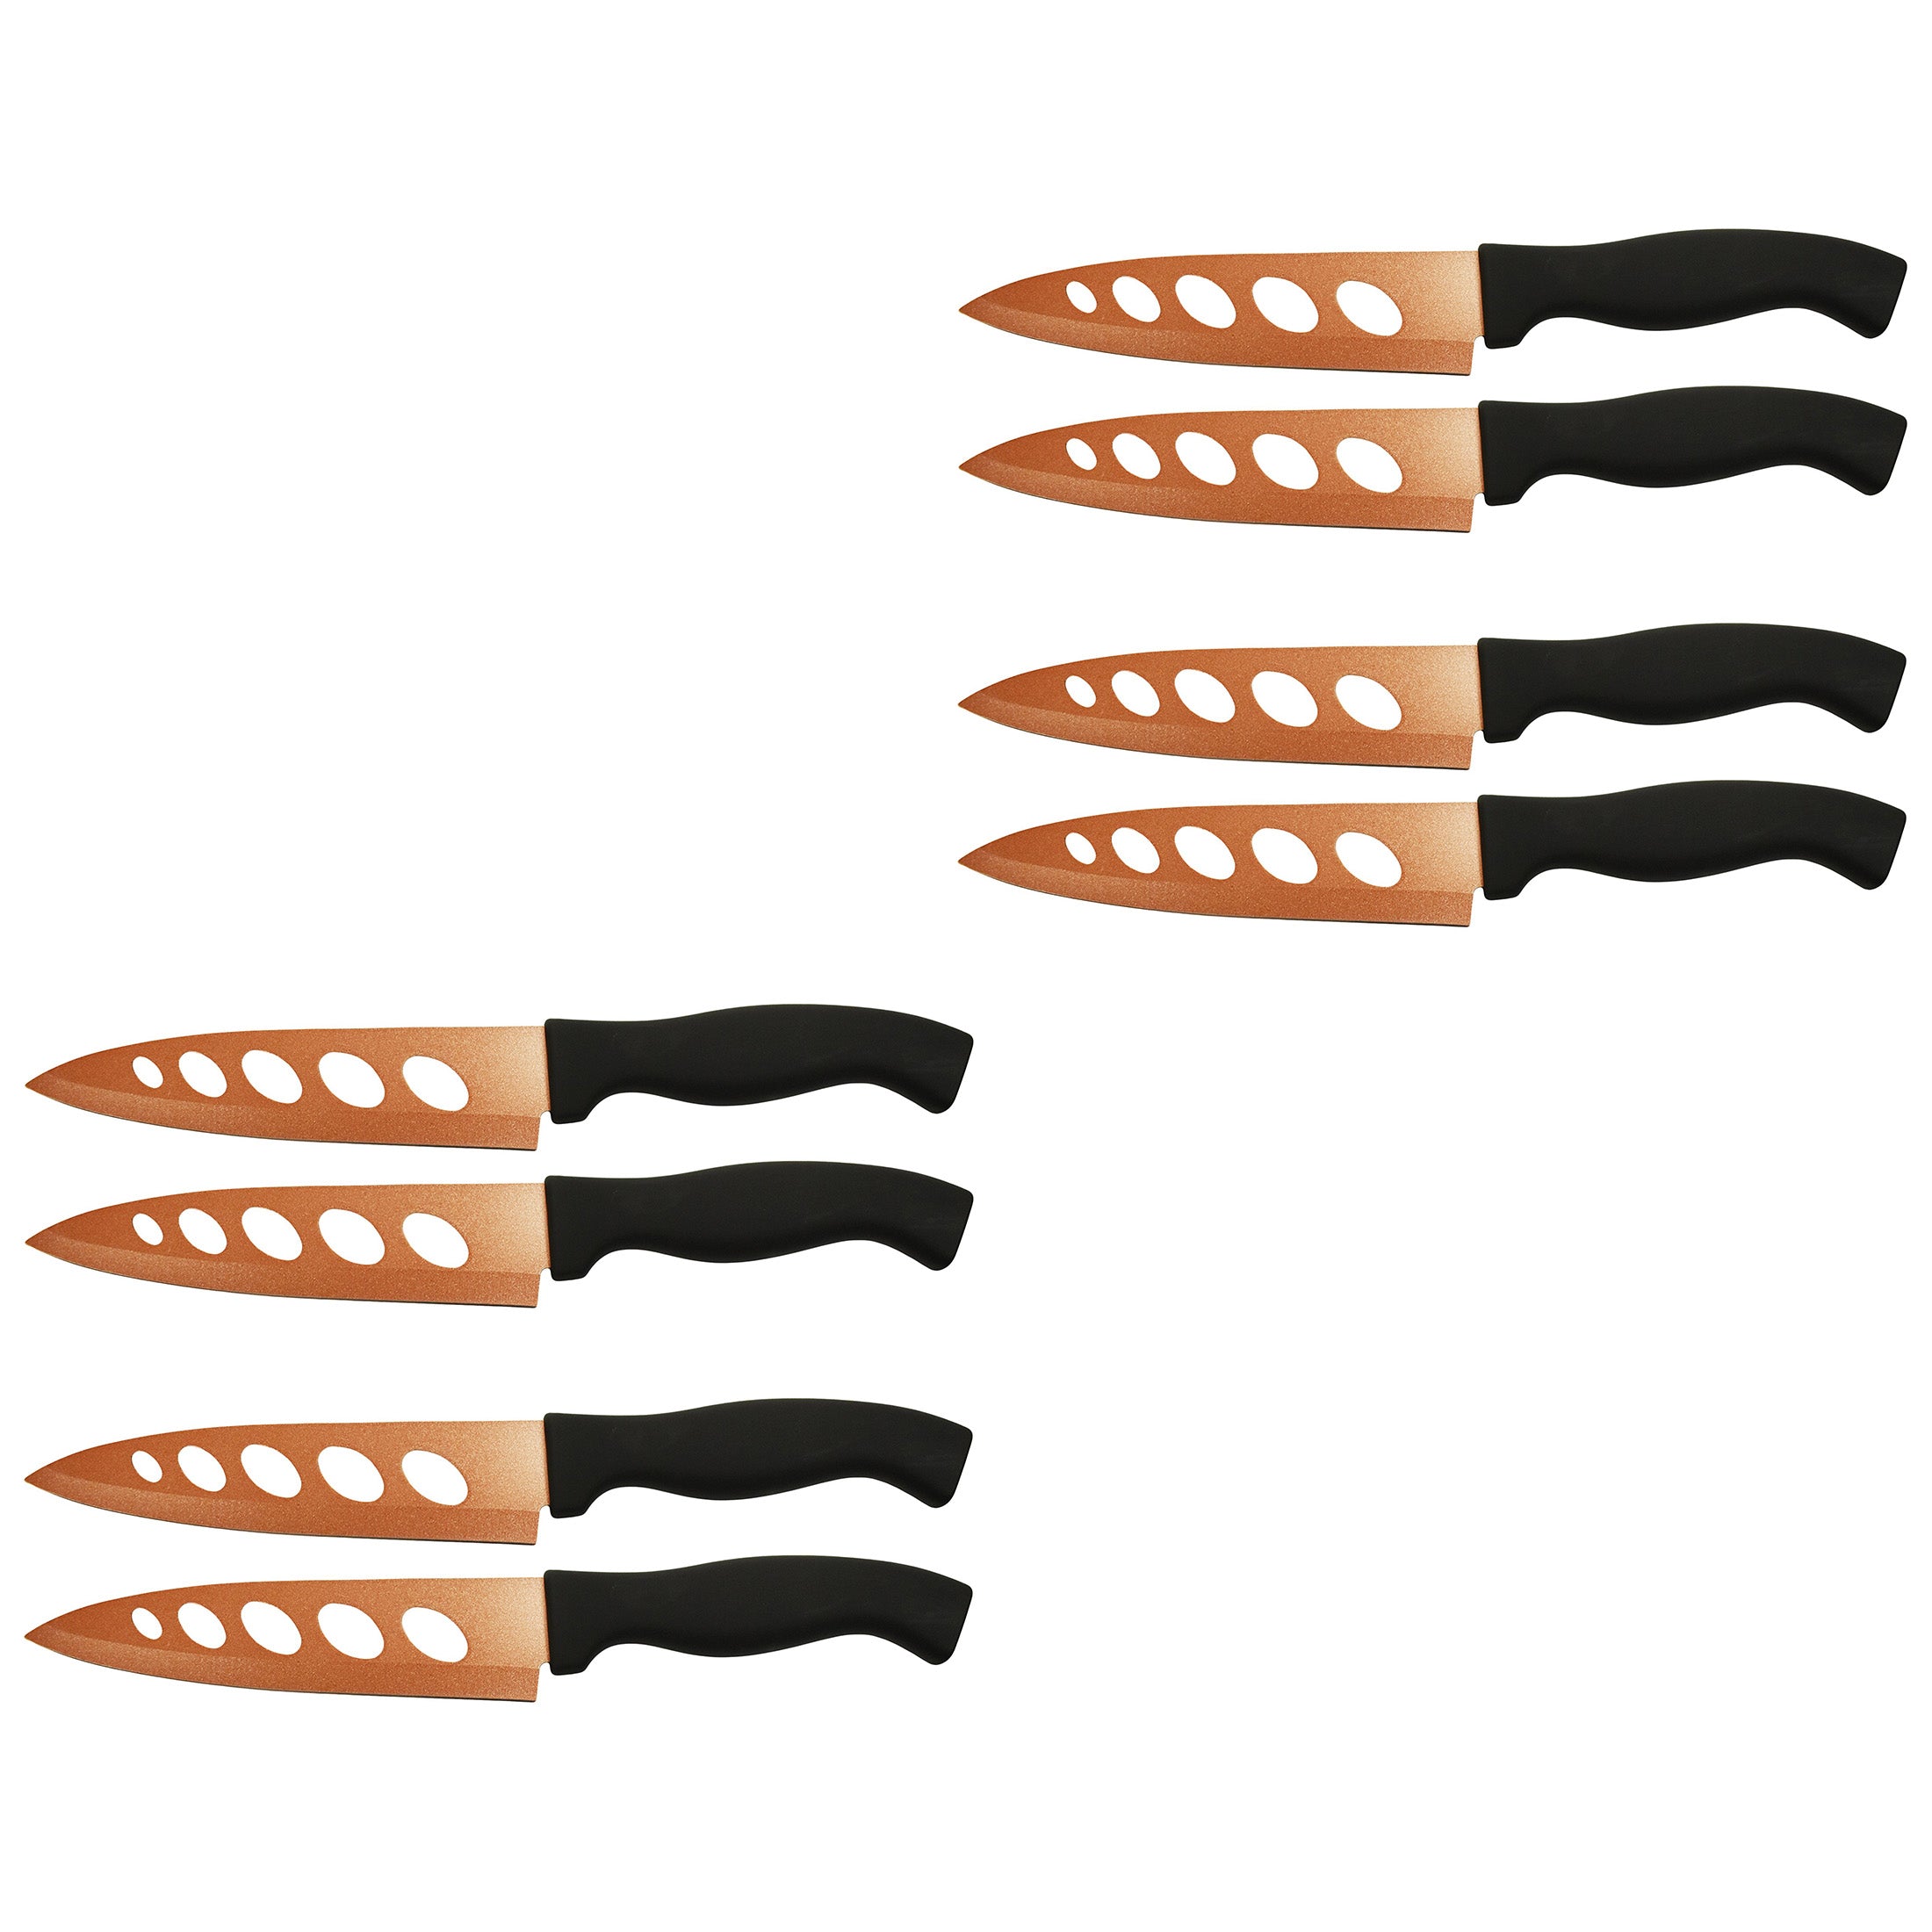 Copper Knife - 8 Pack. Never Needs Sharpening - COPPER KNIFE Stainless Steel Stays Sharp Forever